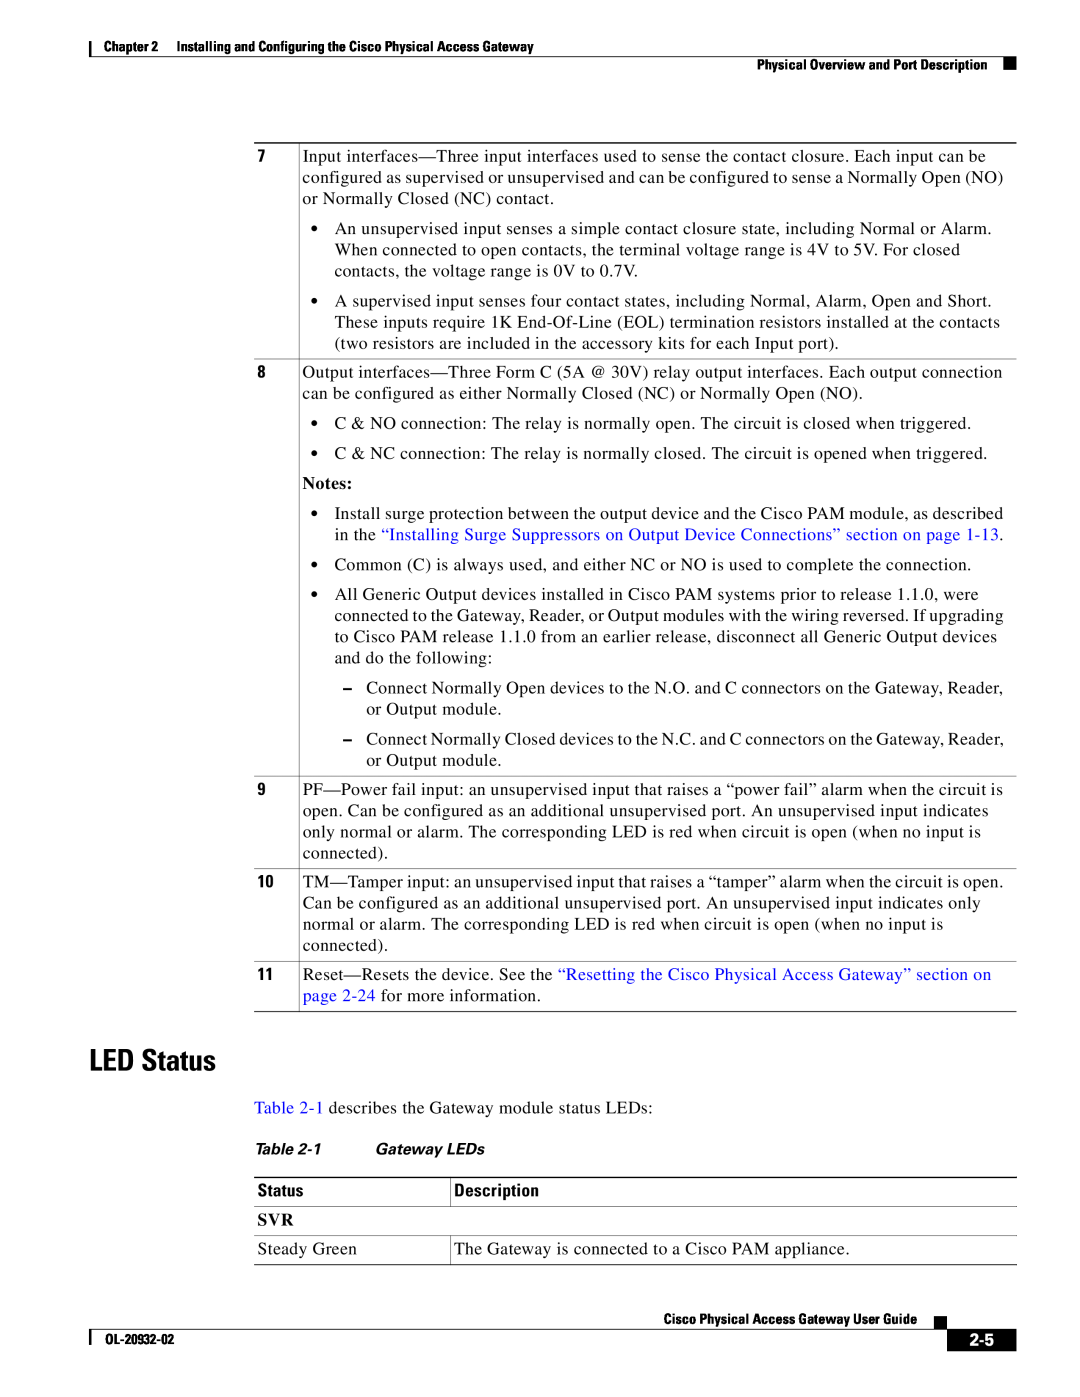 Cisco Systems OL-20932-02 manual LED Status, Description 